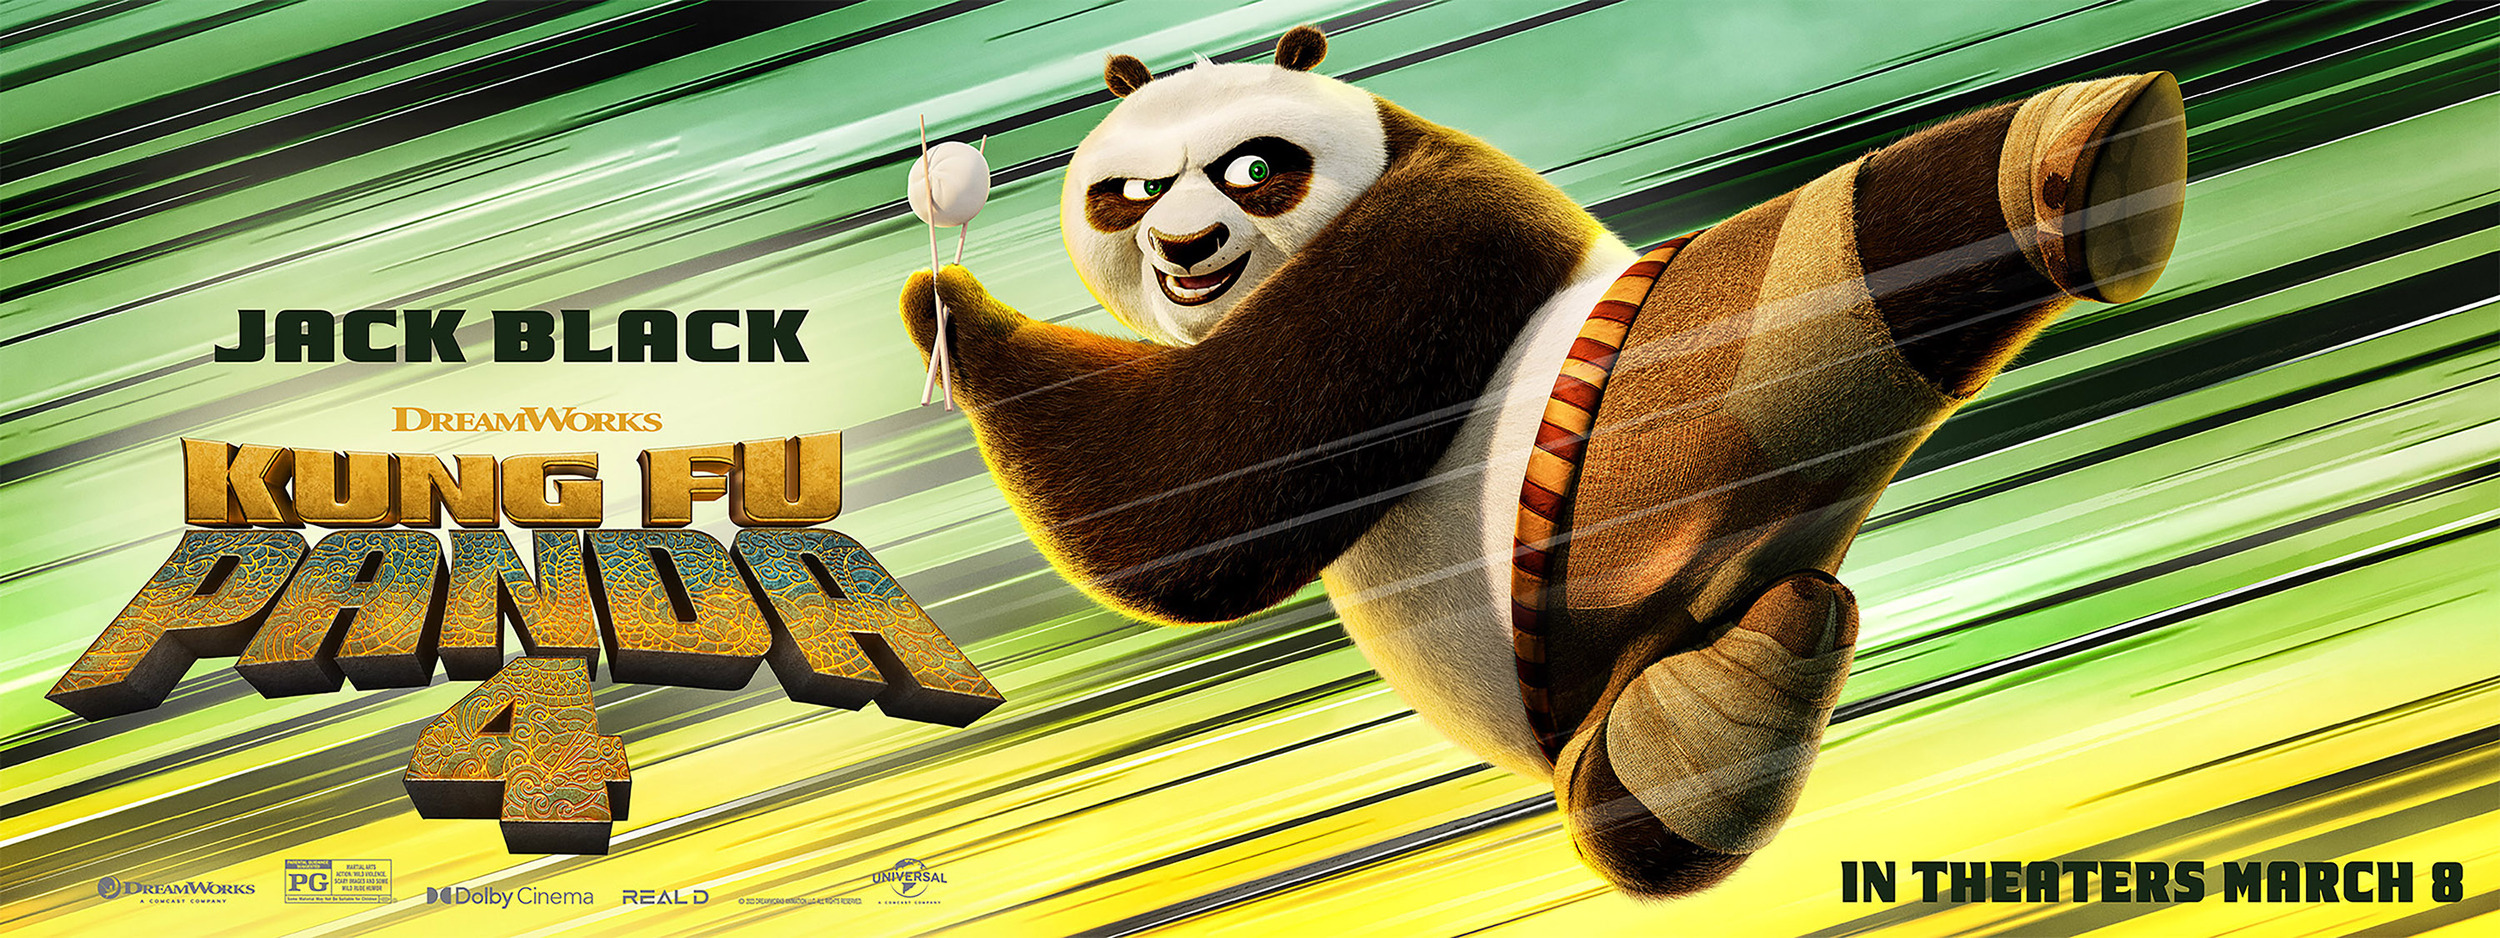 Mega Sized Movie Poster Image for Kung Fu Panda 4 (#18 of 20)